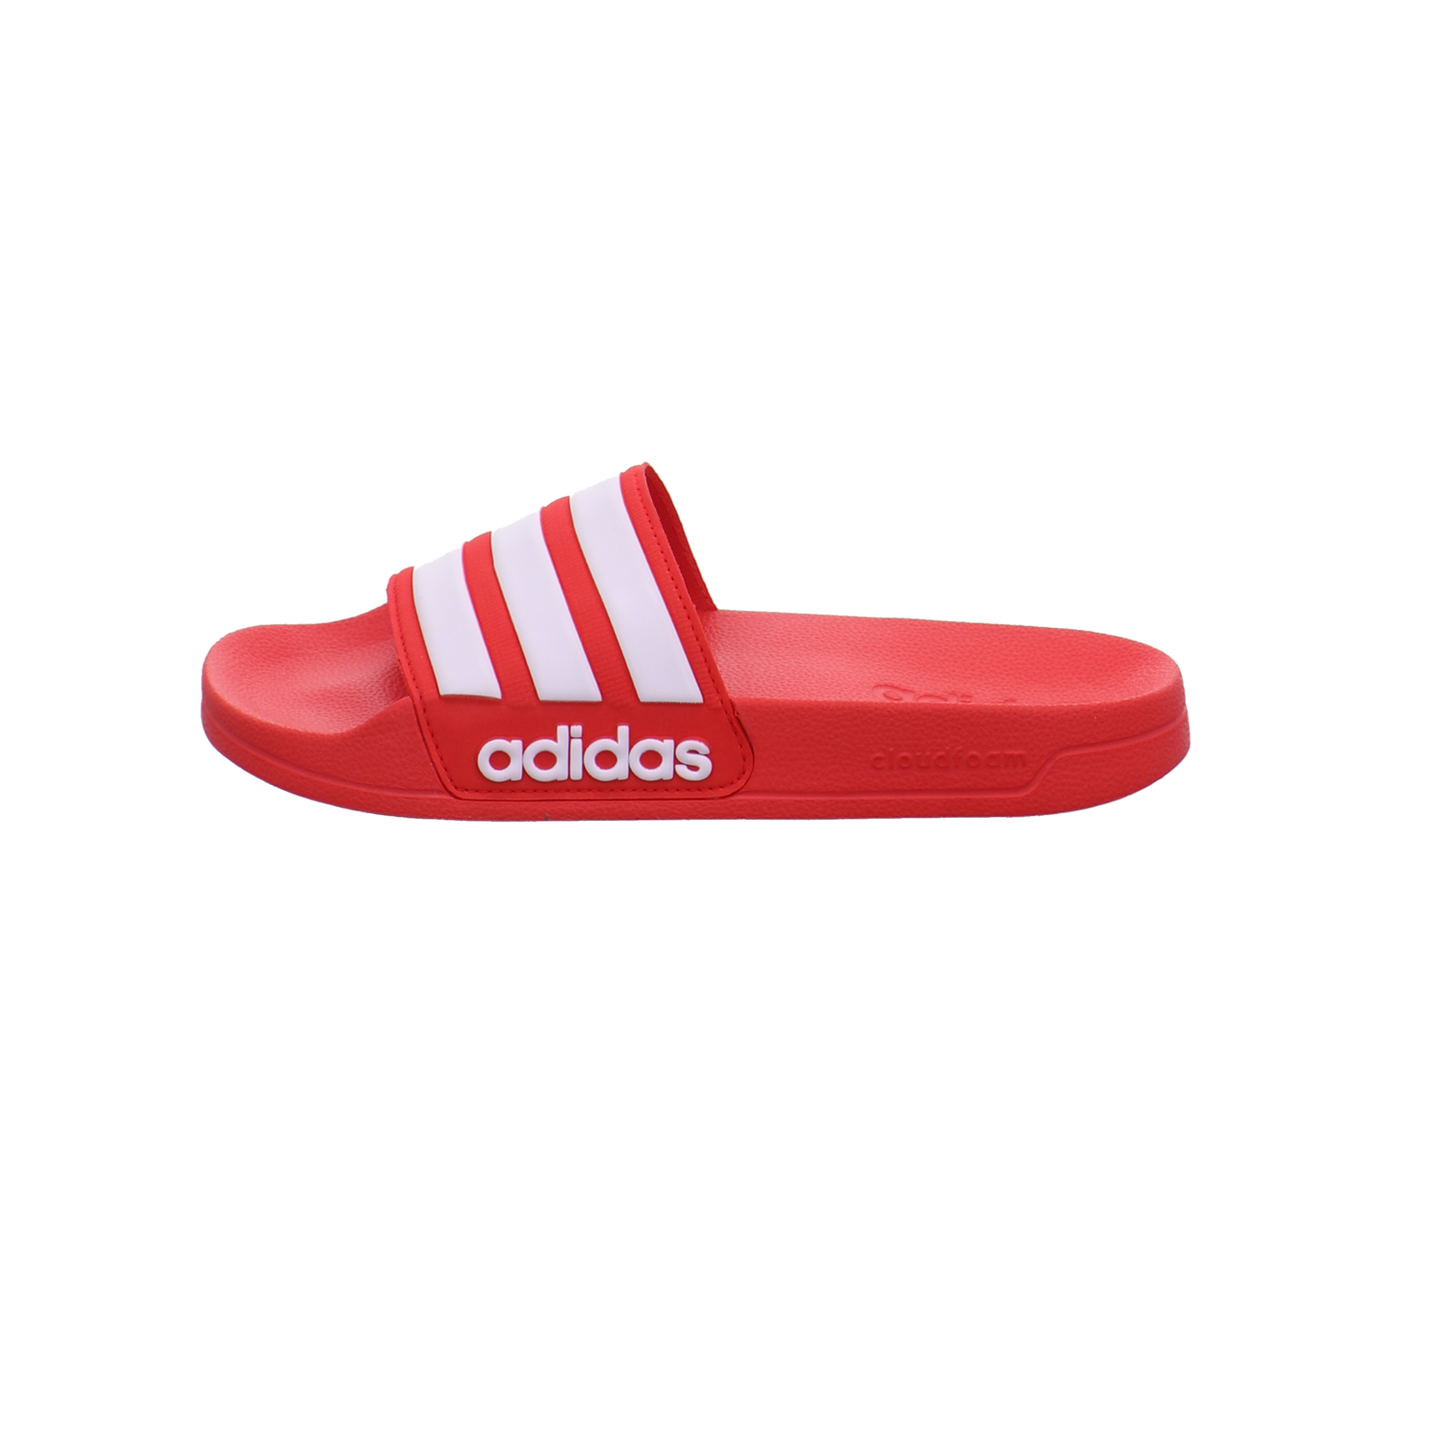 Adidas Schuhe  rot Bild1